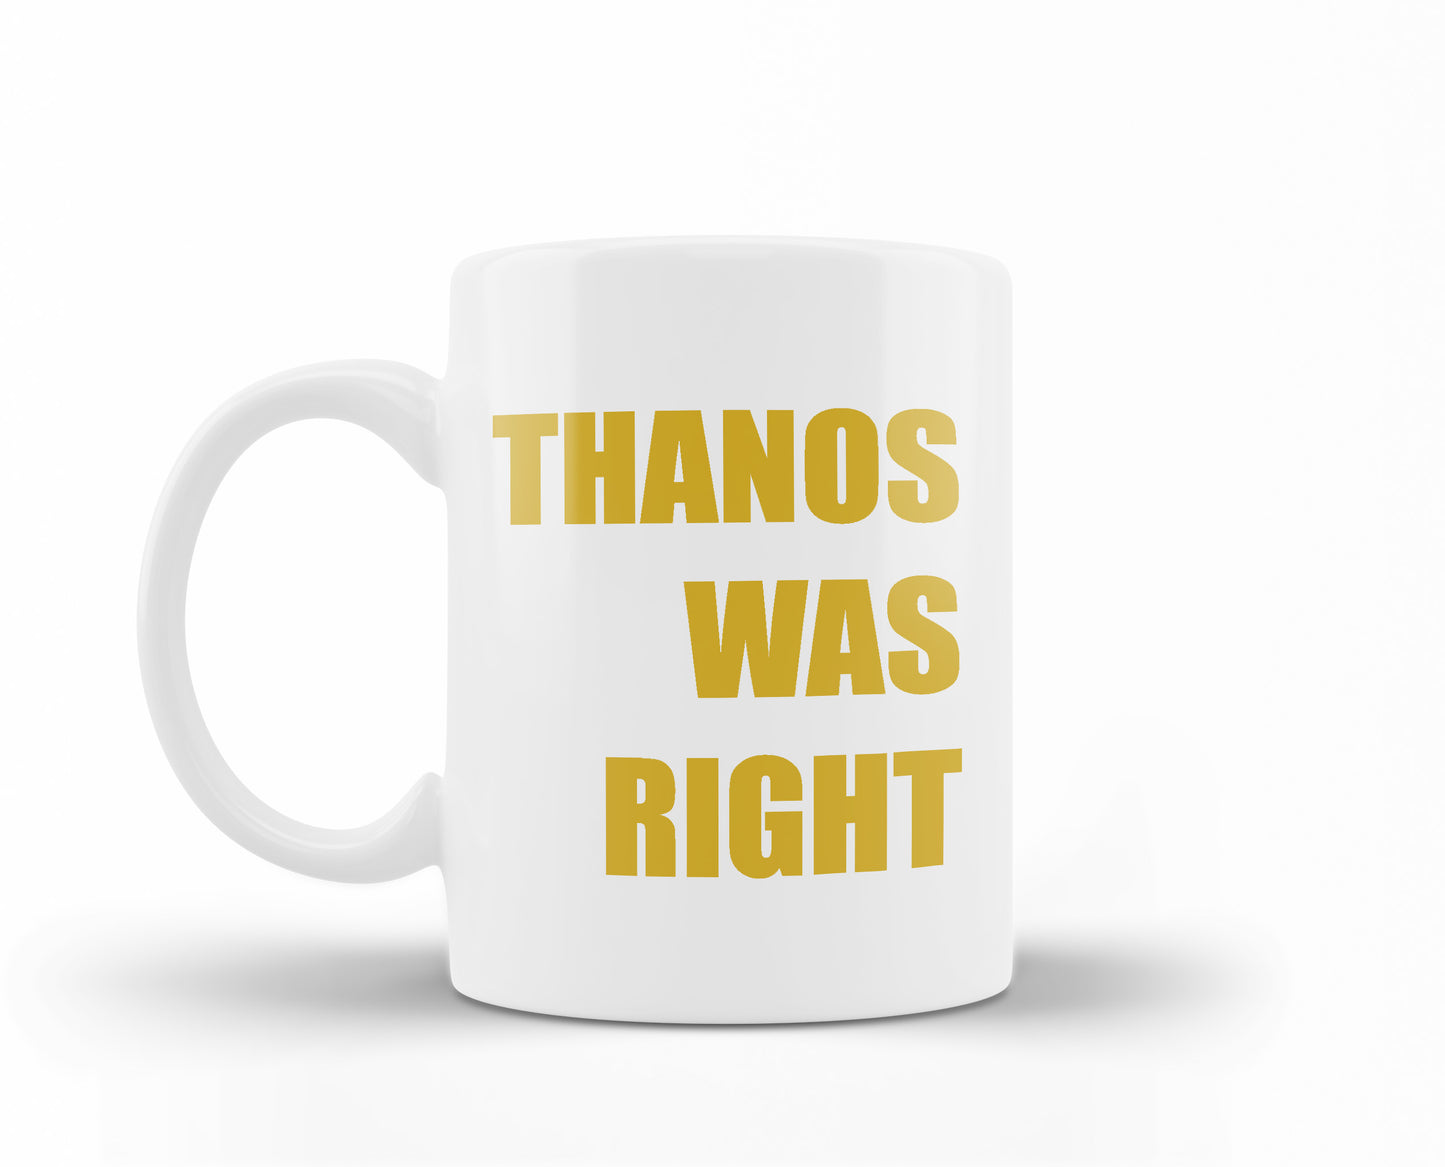 "THANOS WAS RIGHT" Mug